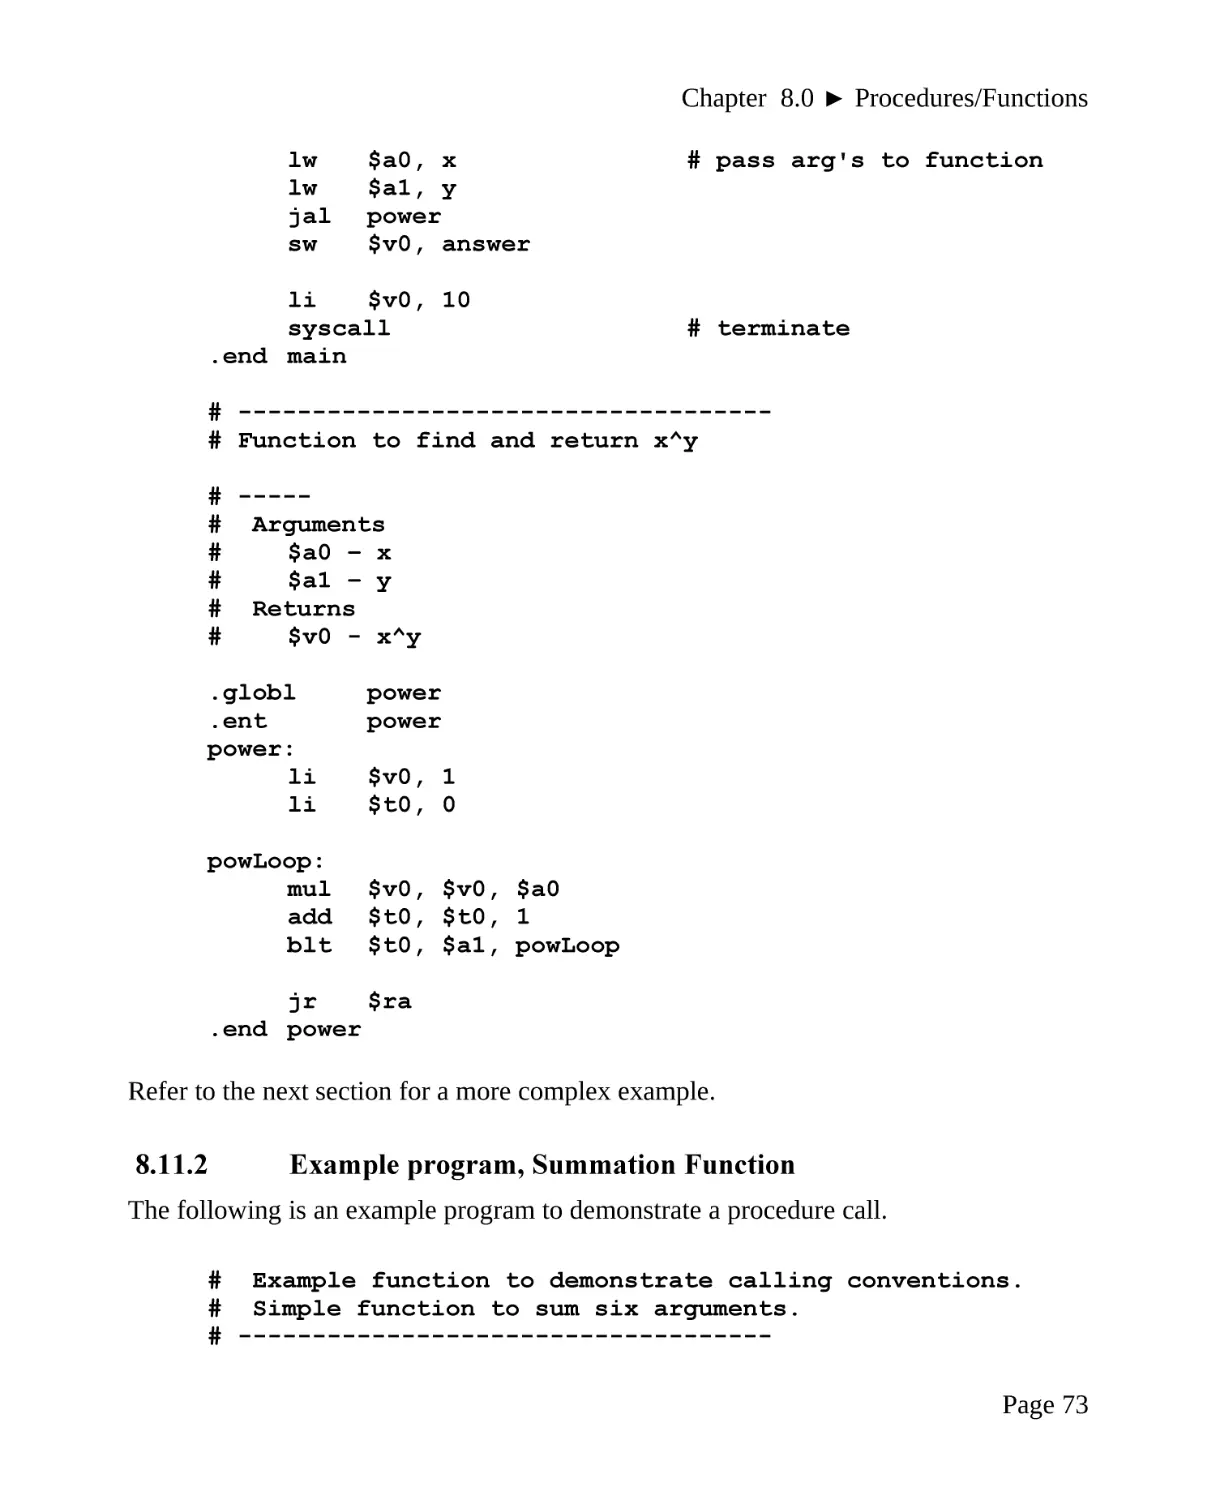 8.11.2 Example program, Summation Function